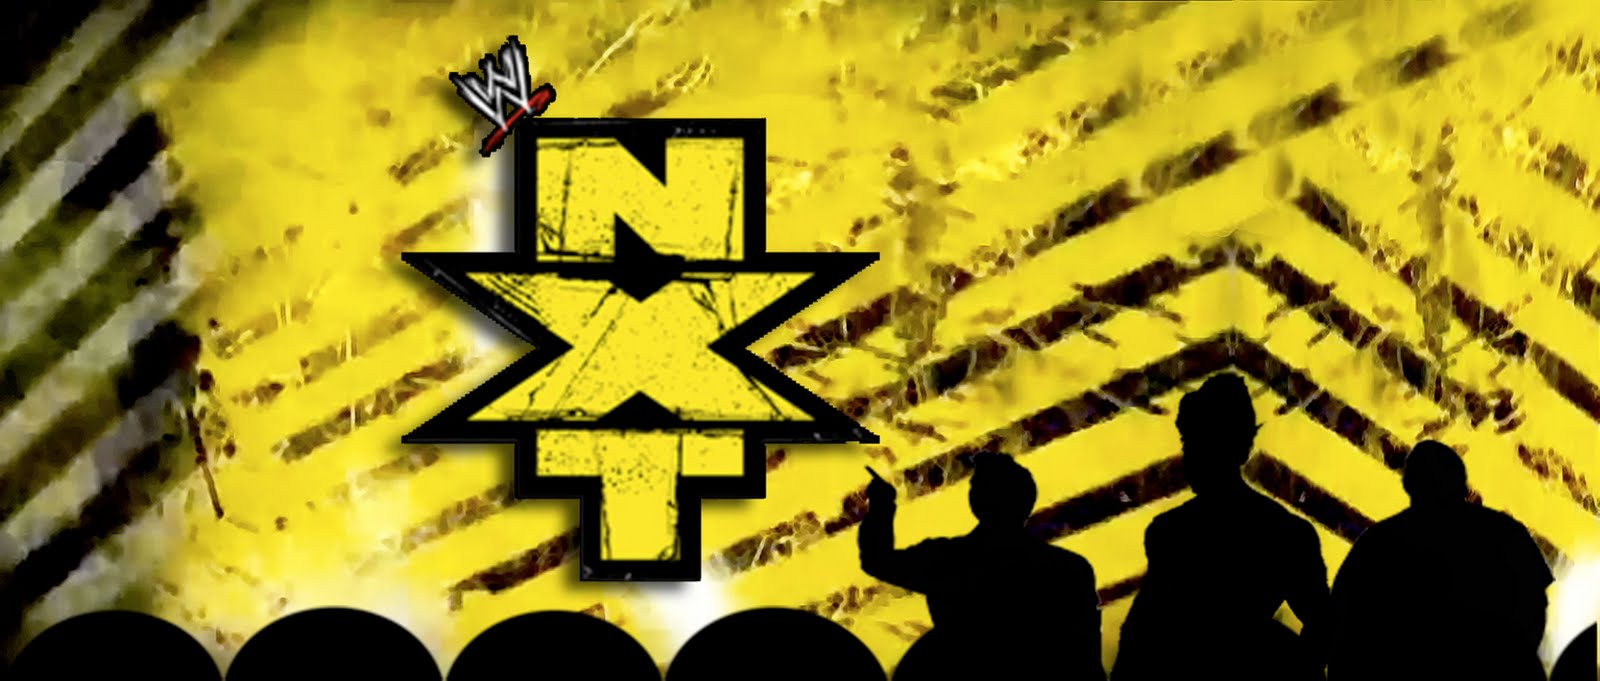  WWE NXT S04E10 (8th February 2011) NXT+copy